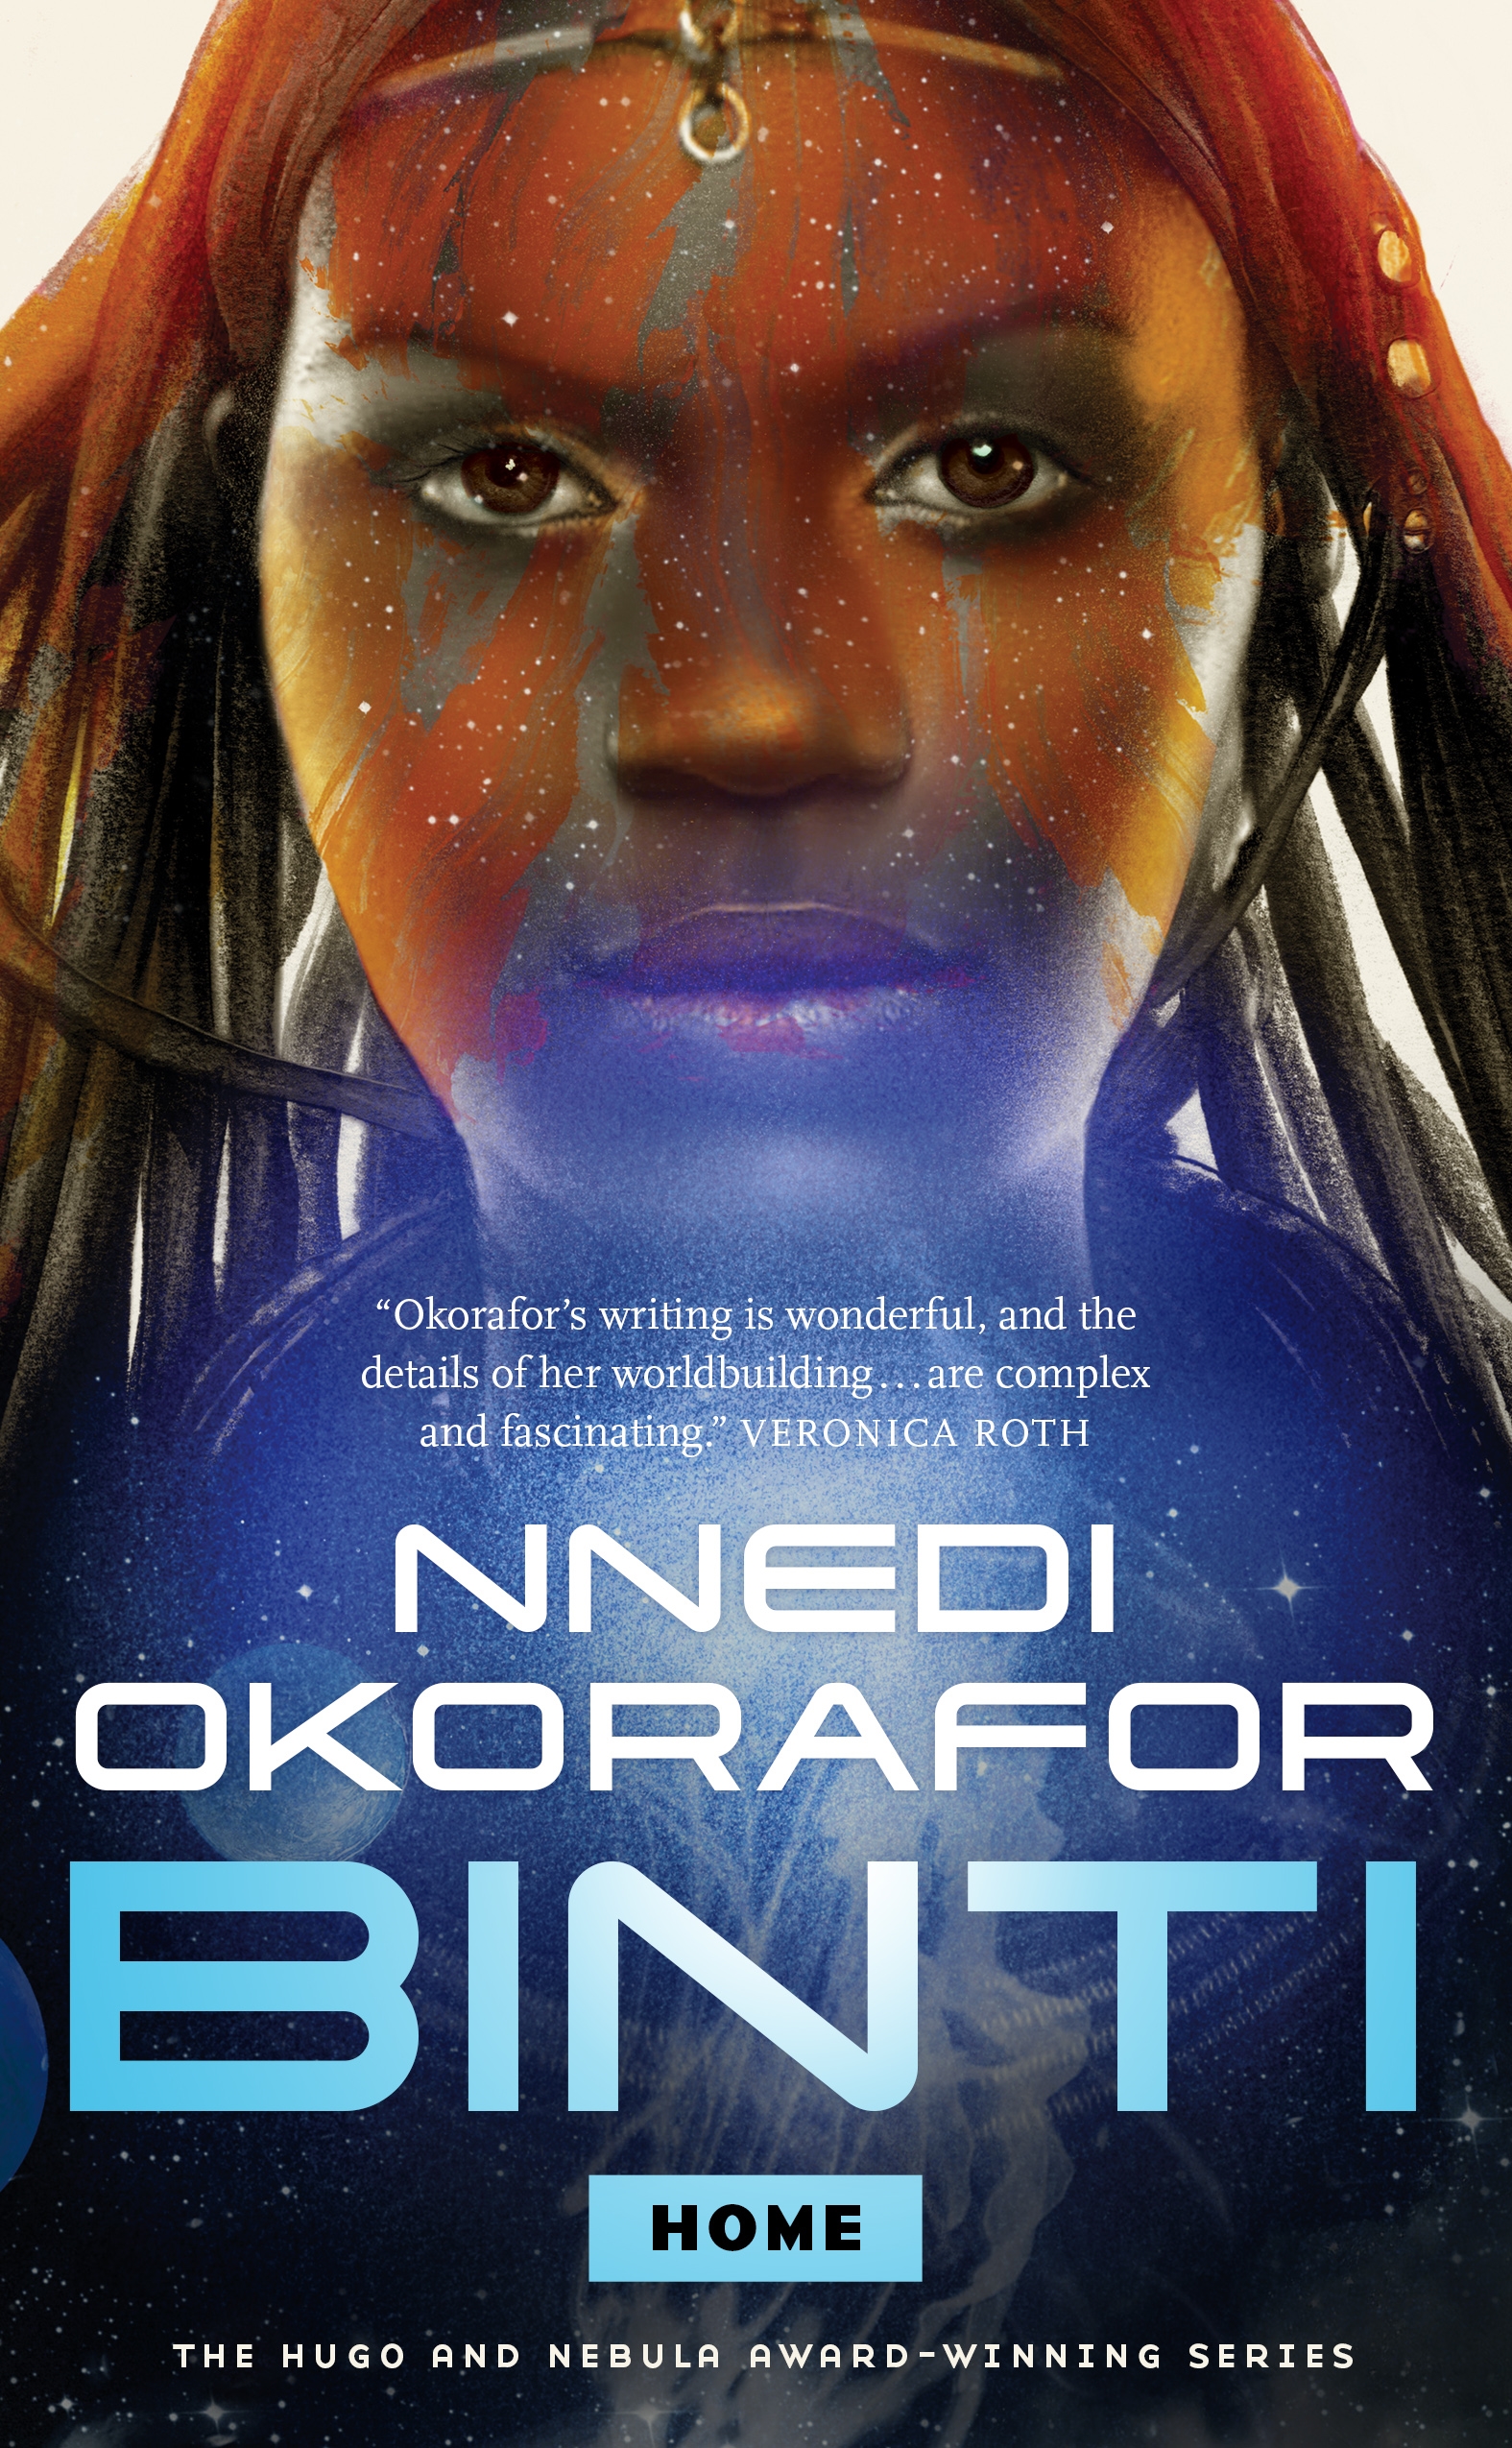 Binti: Home by Nnedi Okorafor